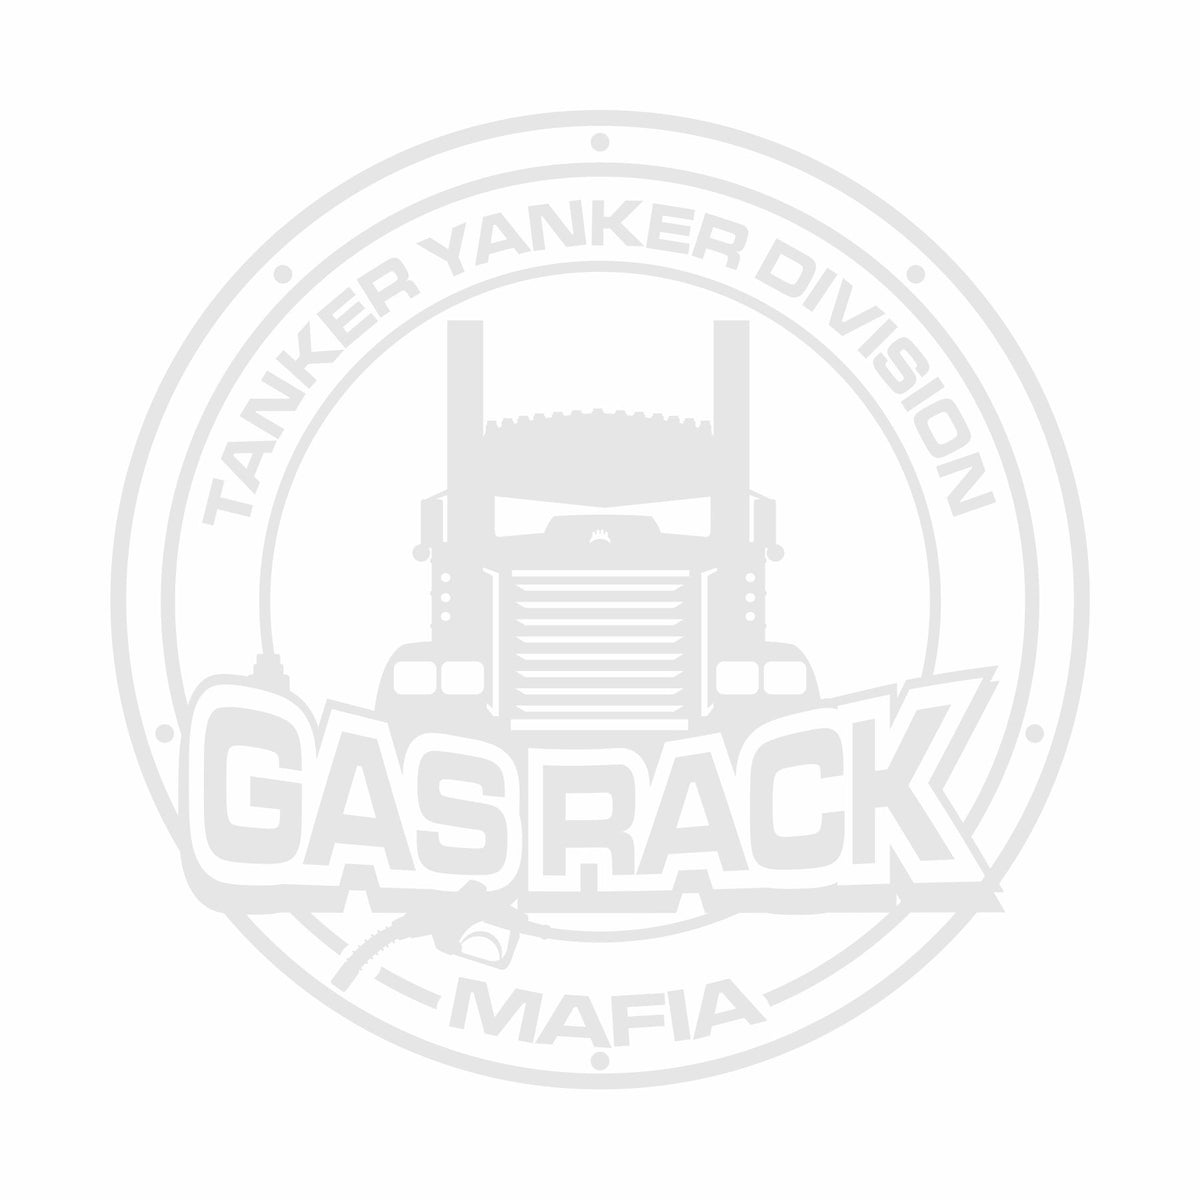 Gas Rack Mafia KW Vinyl Decal Free Shipping